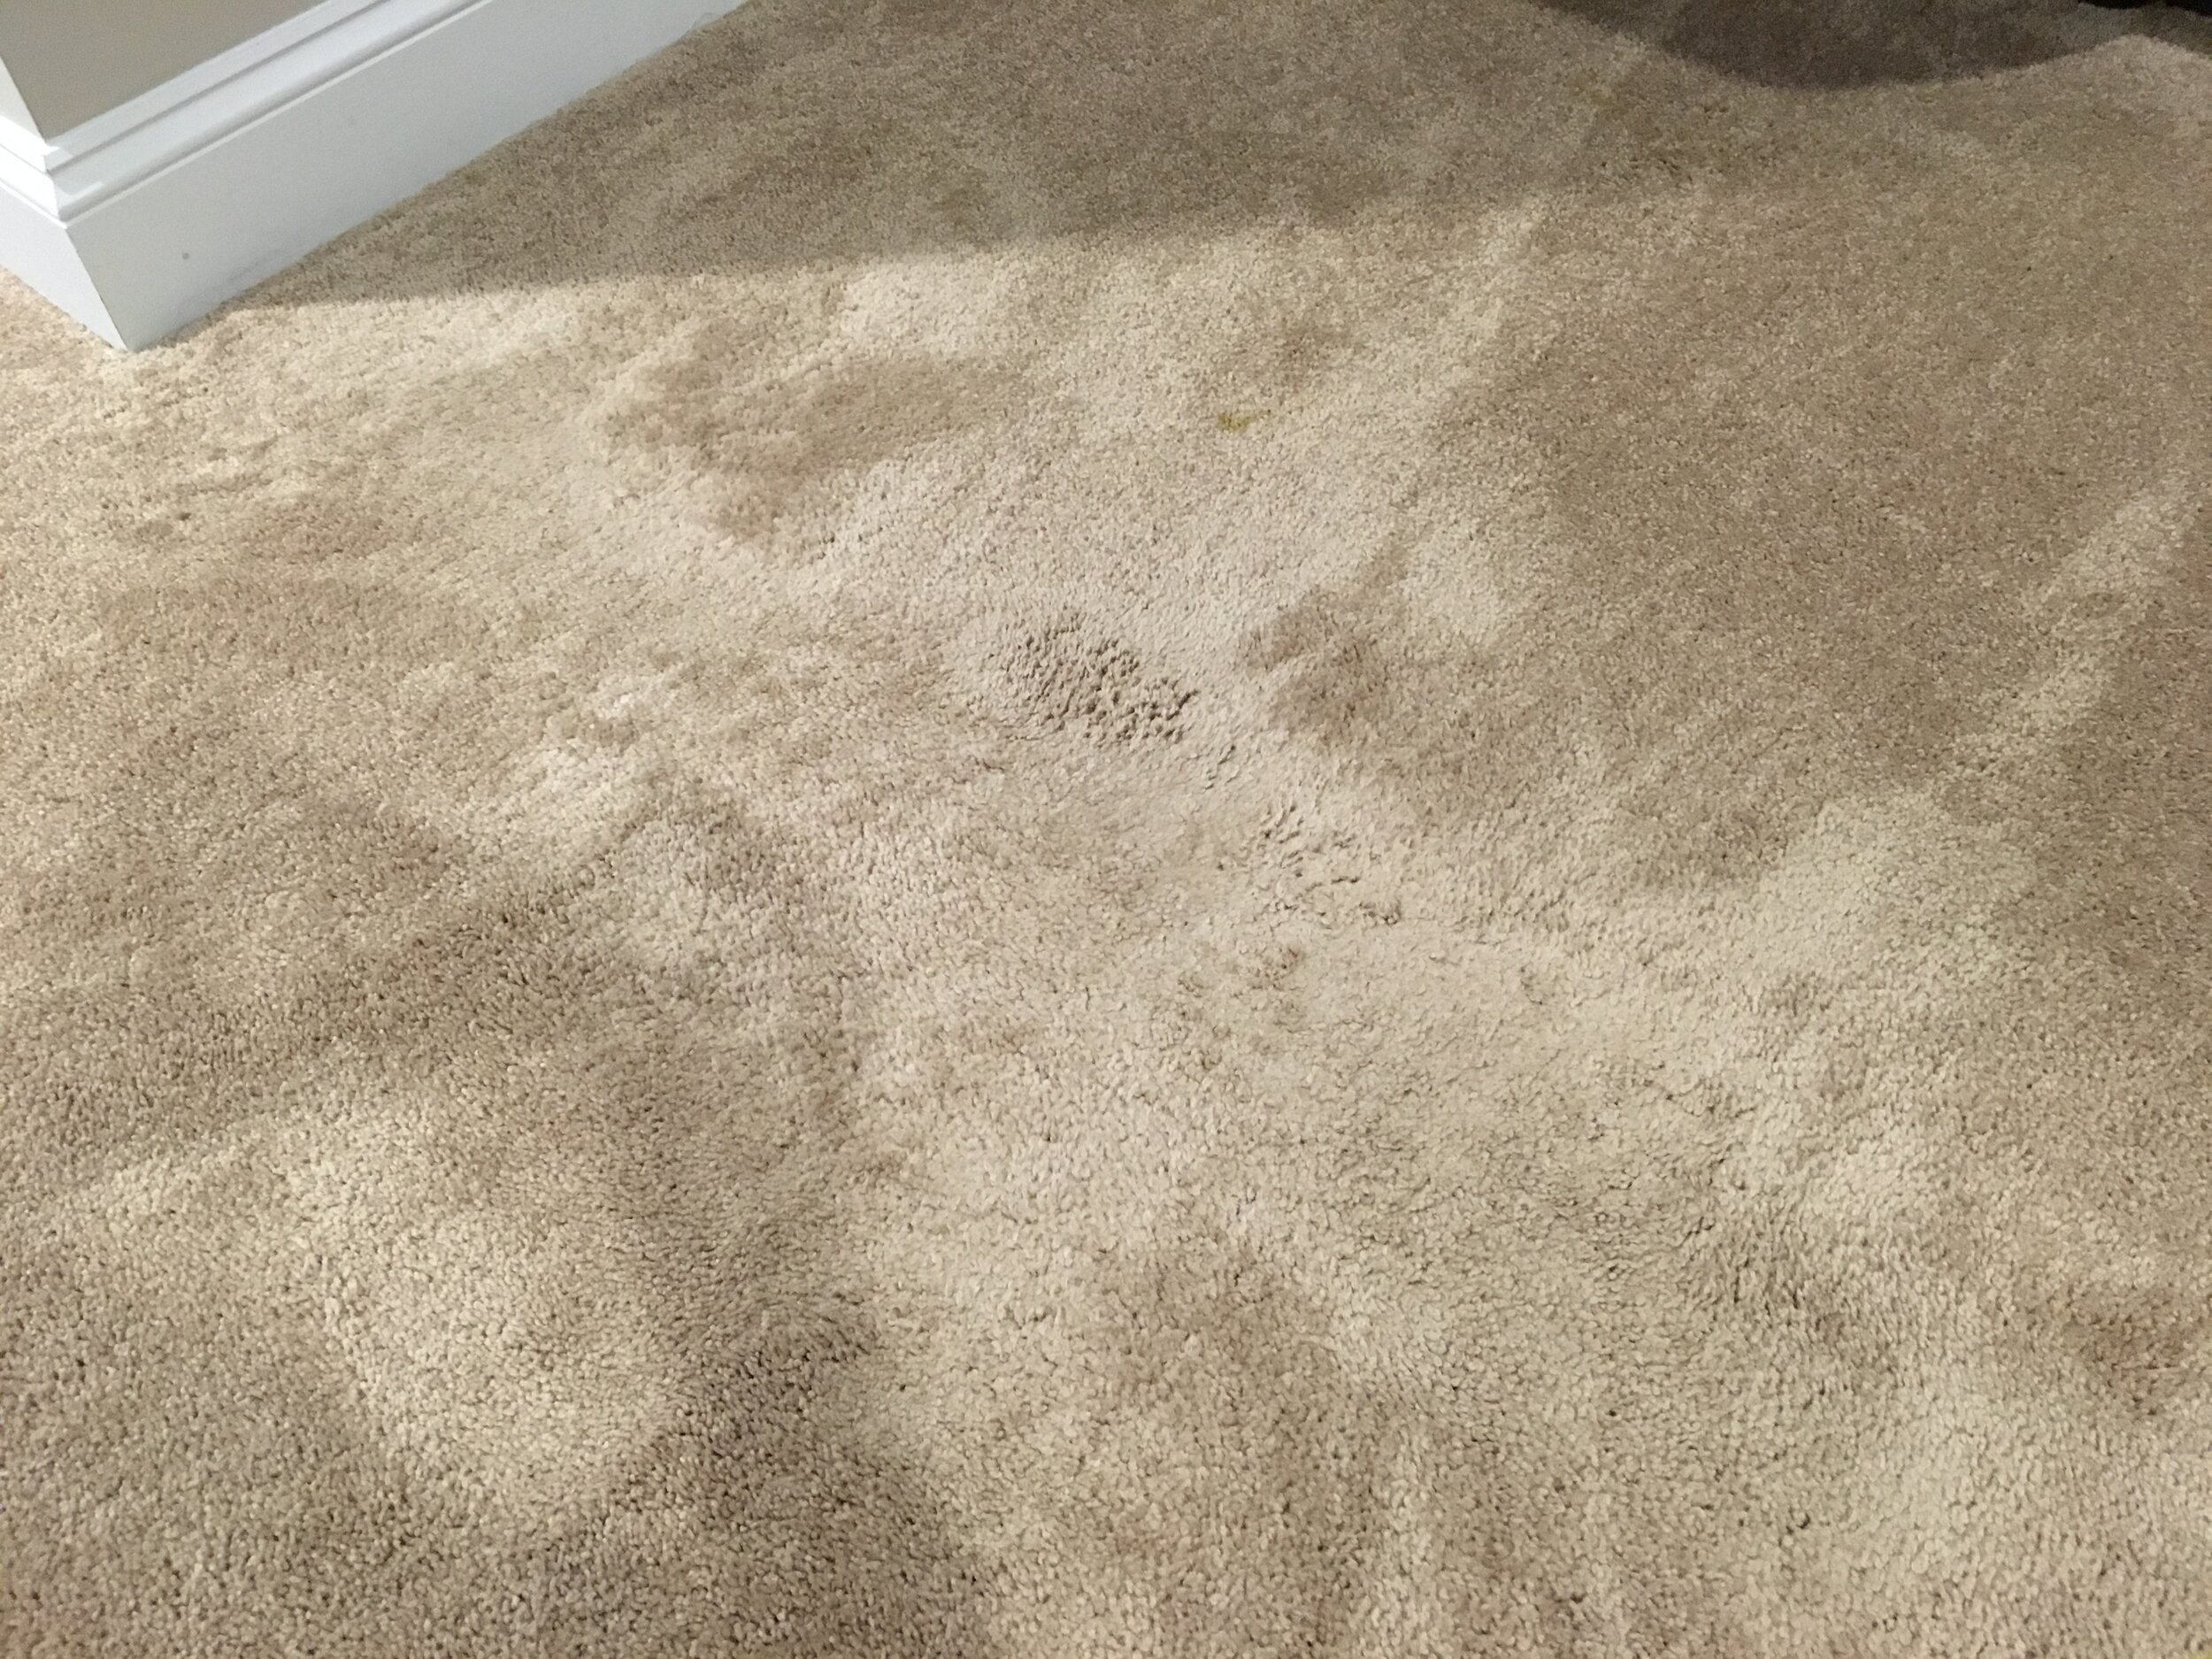 ugly worn out carpet.jpeg